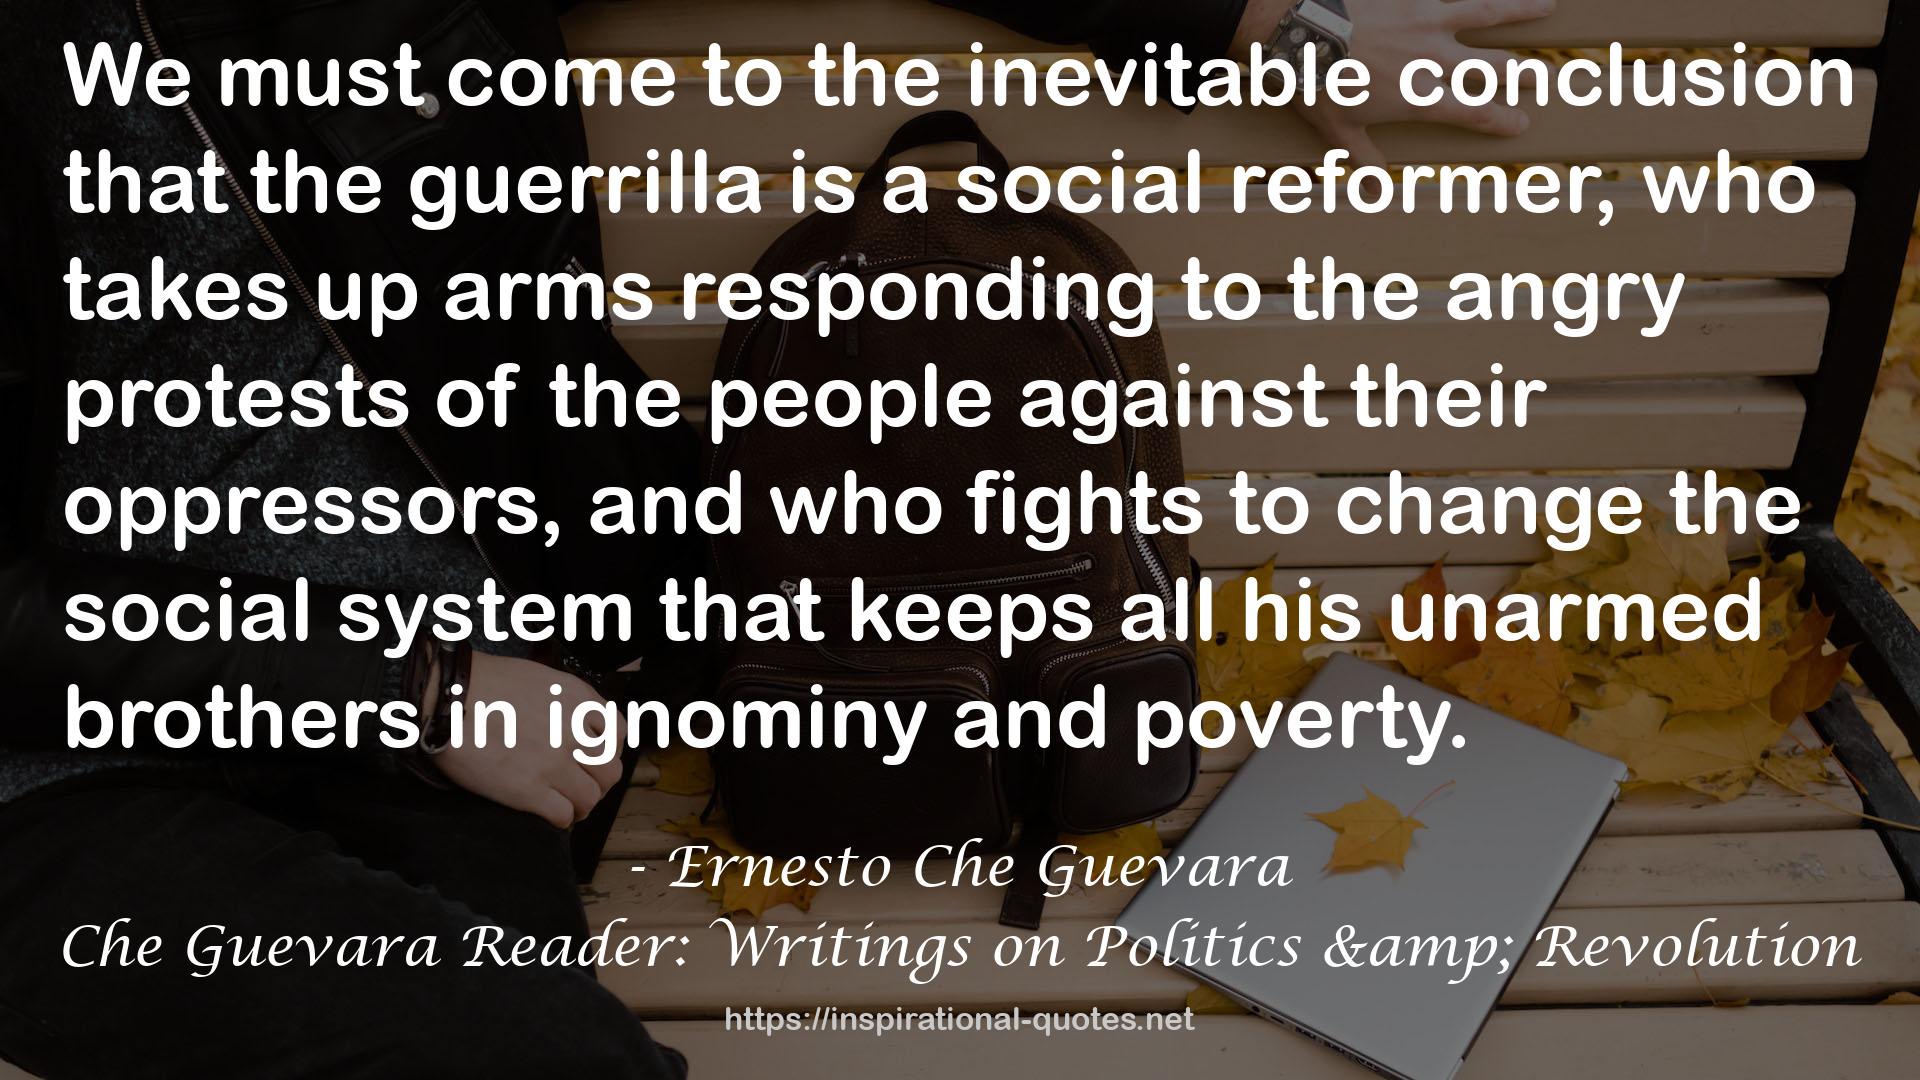 Che Guevara Reader: Writings on Politics & Revolution QUOTES